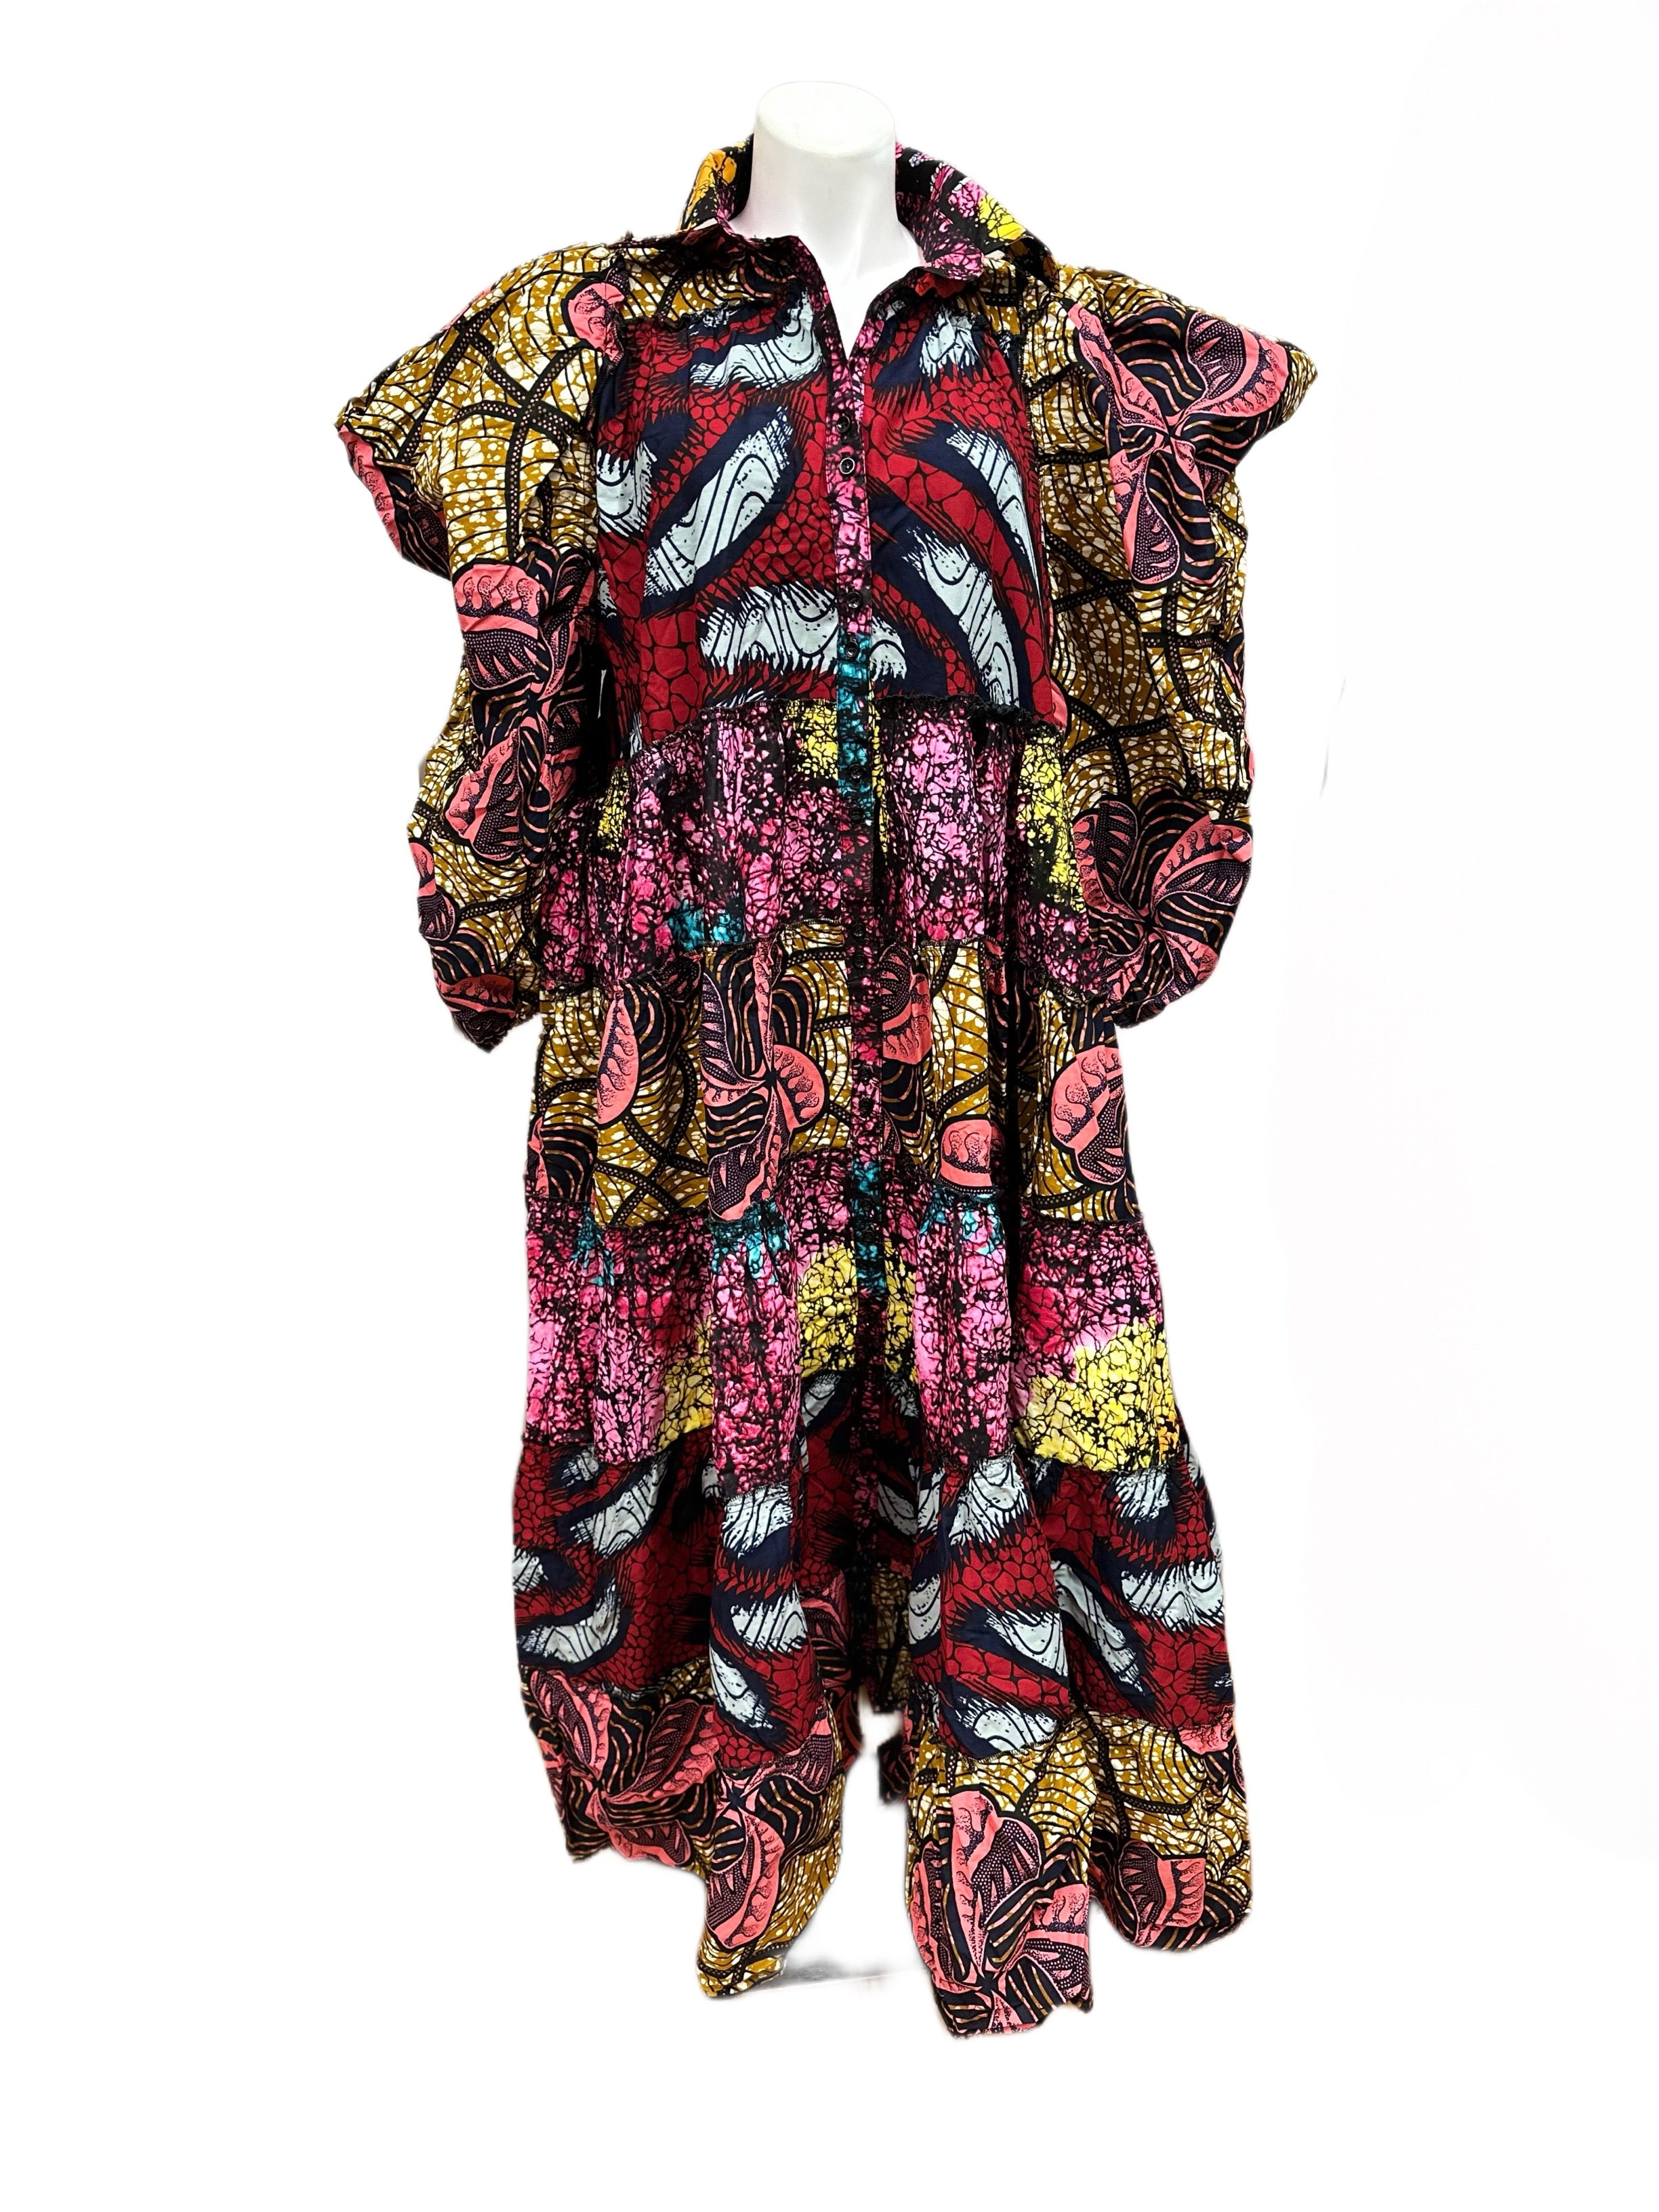 Batik Puff Sleeve Show Stopping Long Jacket or Dress